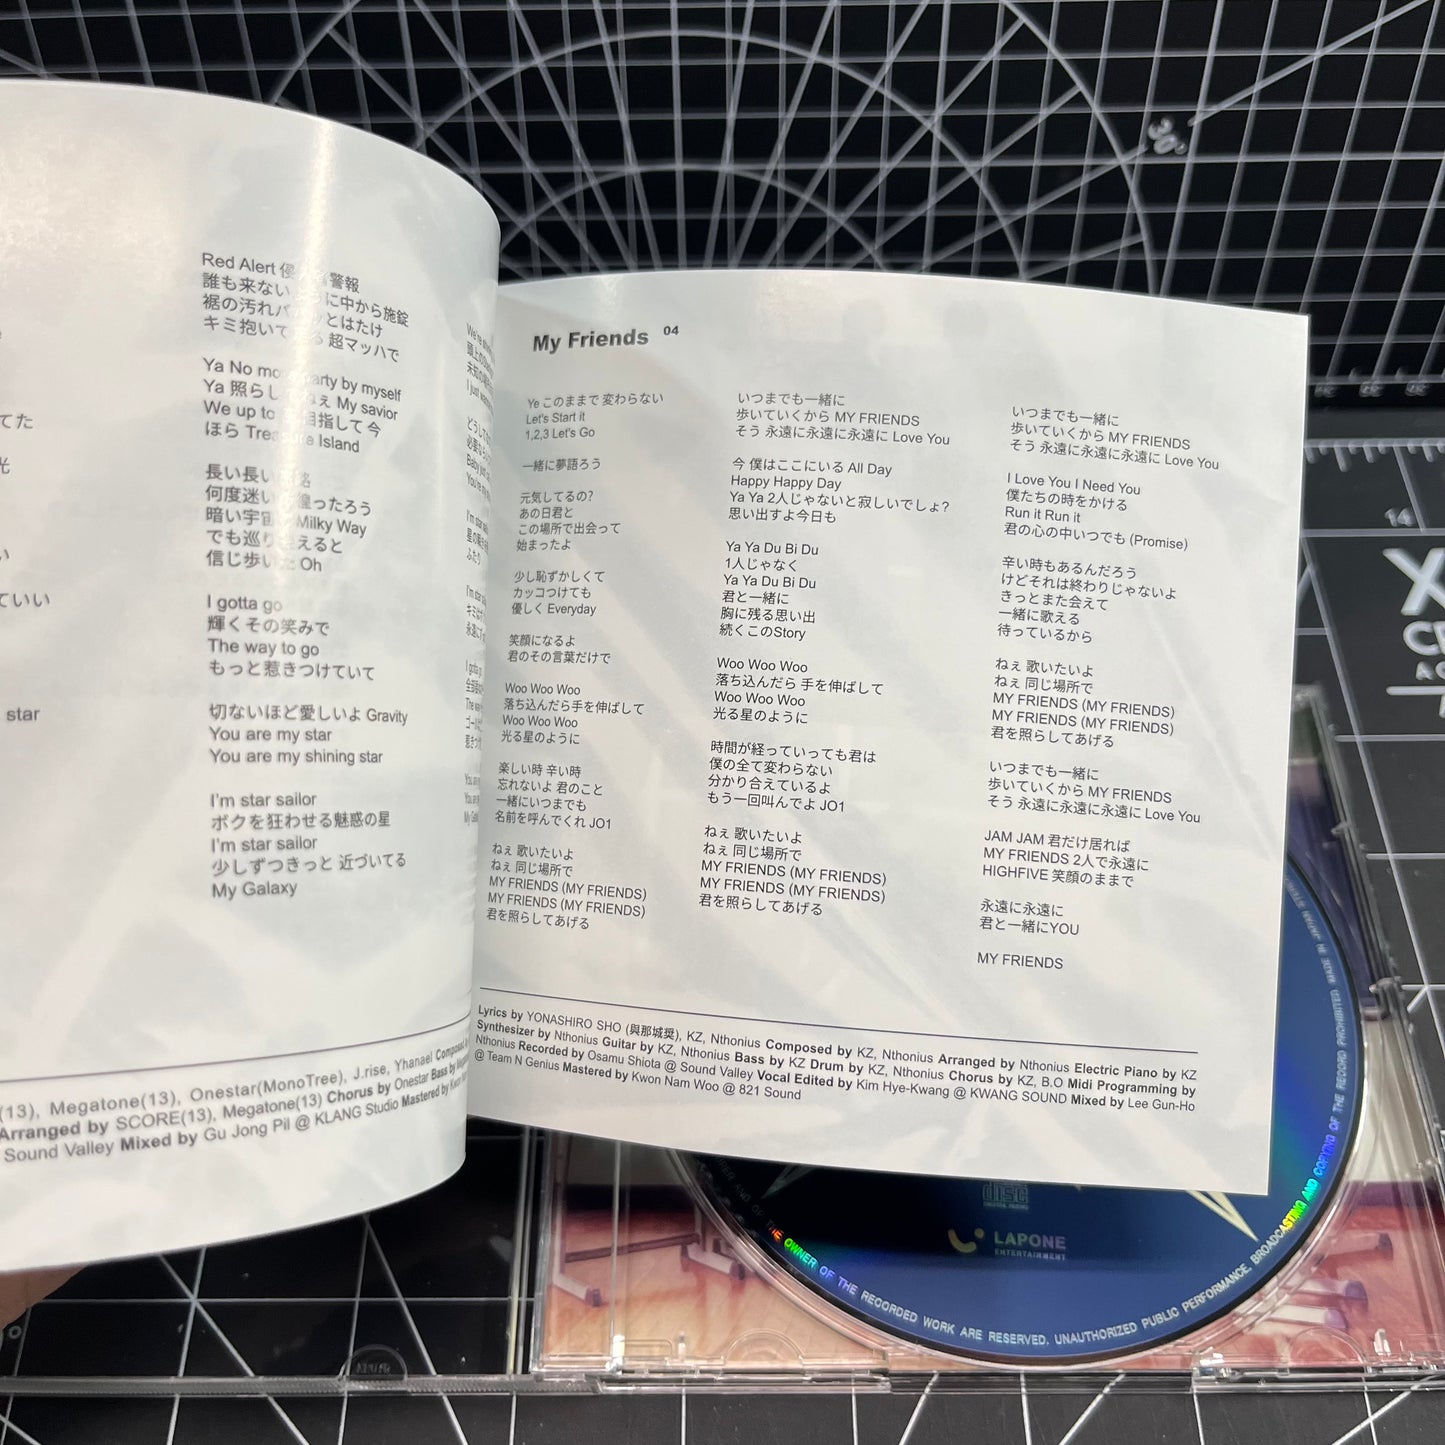 JO1 First Limited Edition CD STAR GAZER (Limited Edition B) - No Photocard